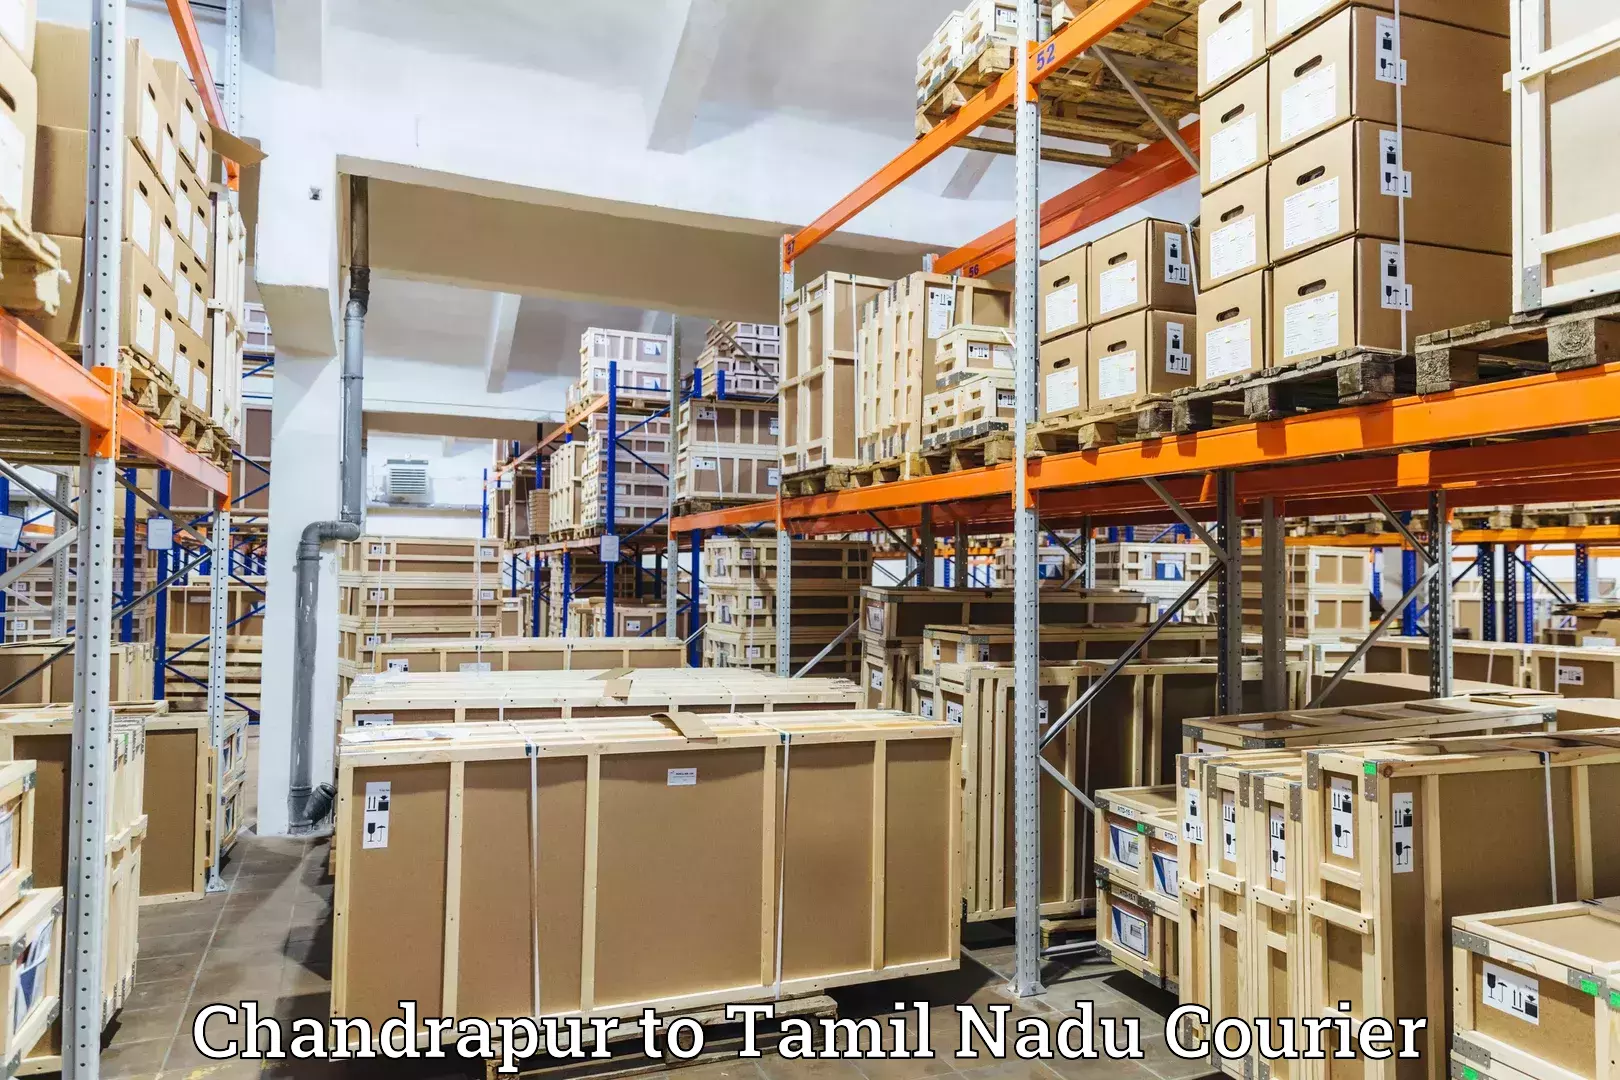 Express logistics service Chandrapur to Madurai